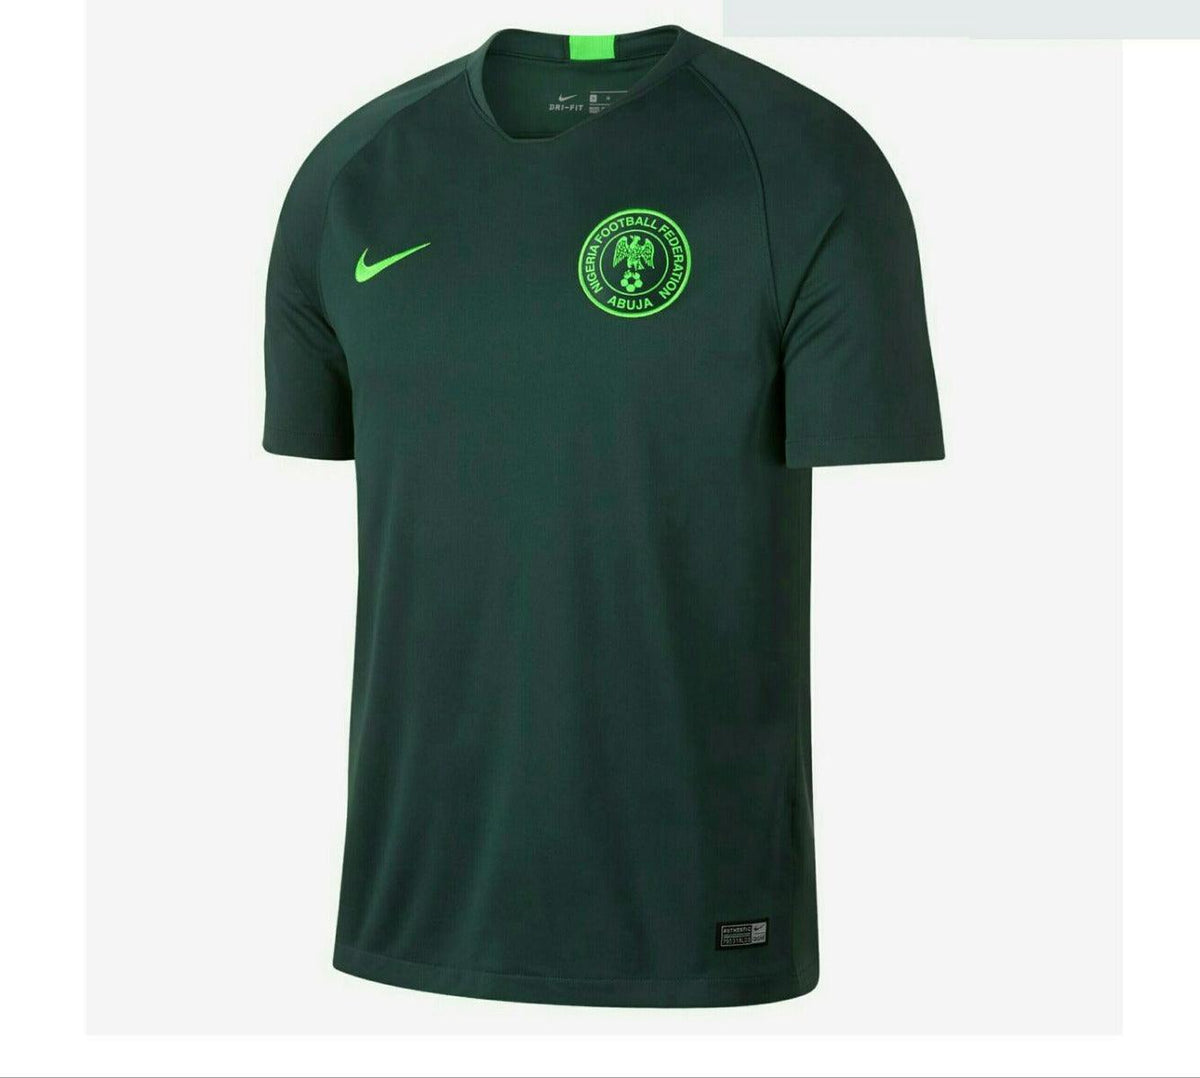 Nigeria 2018 World Cup Away jersey - Obeezi.com